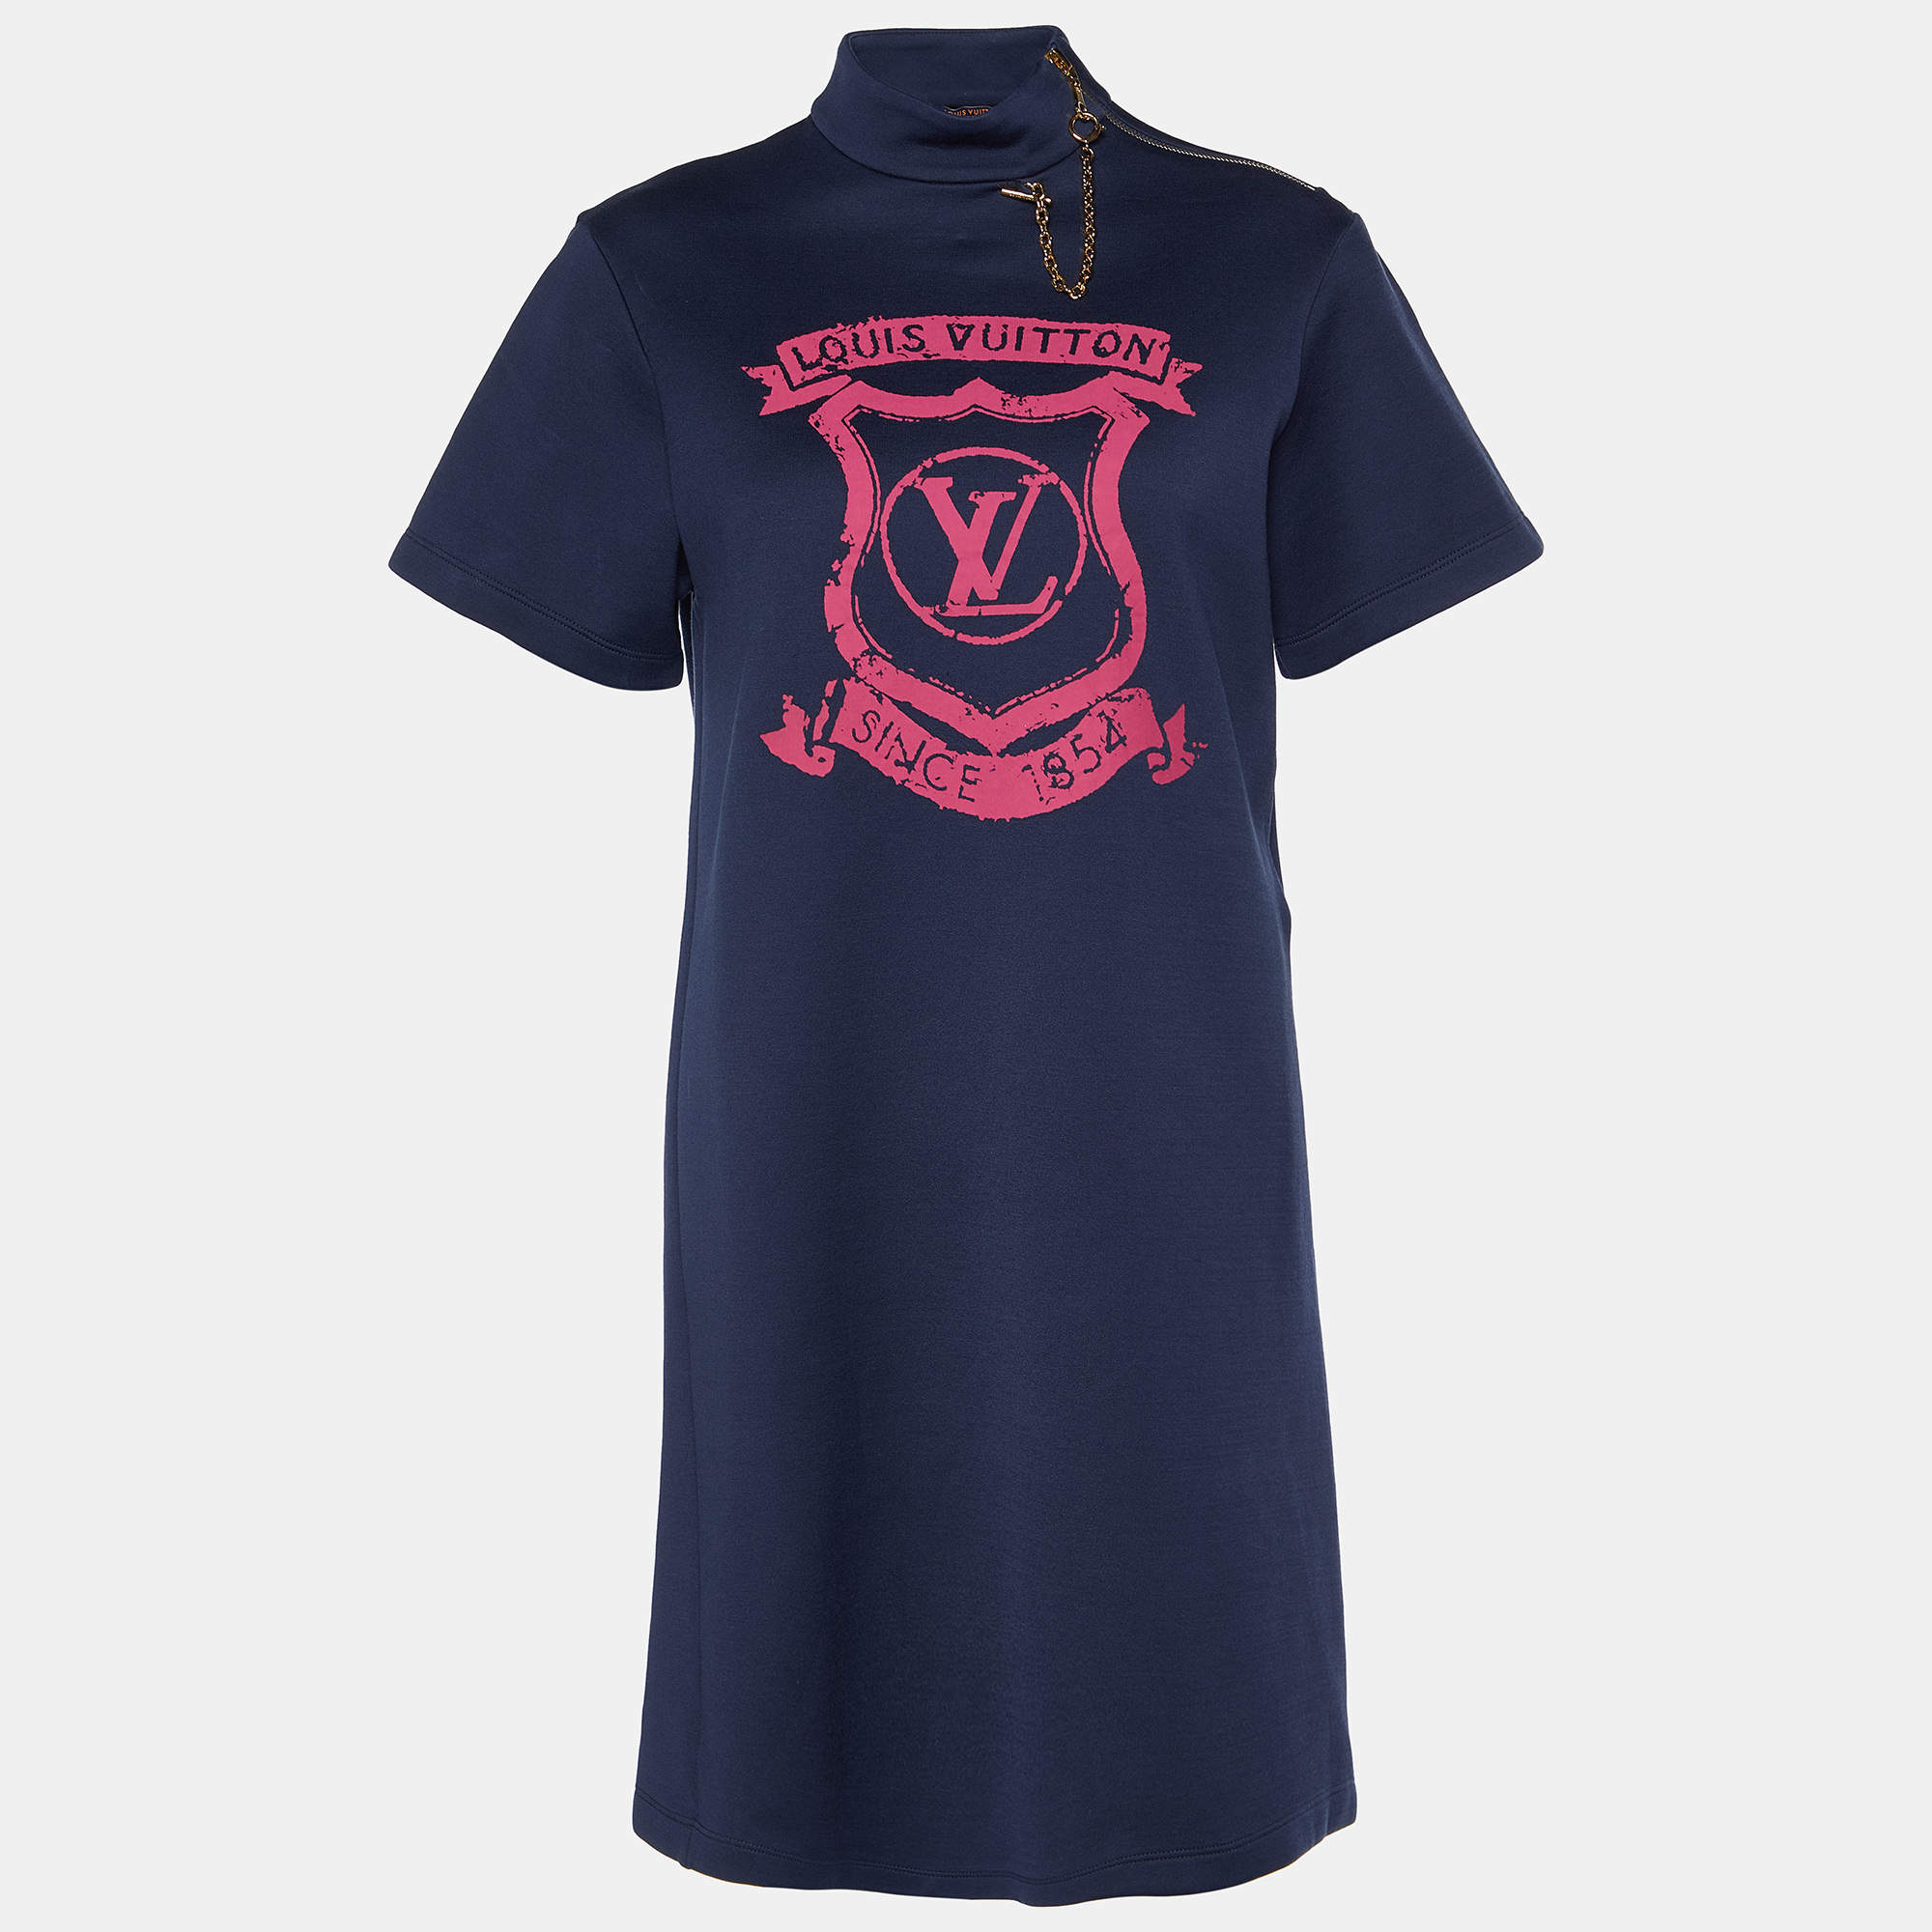 Louis Vuitton Logo Shirt Since 1854 - High-Quality Printed Brand